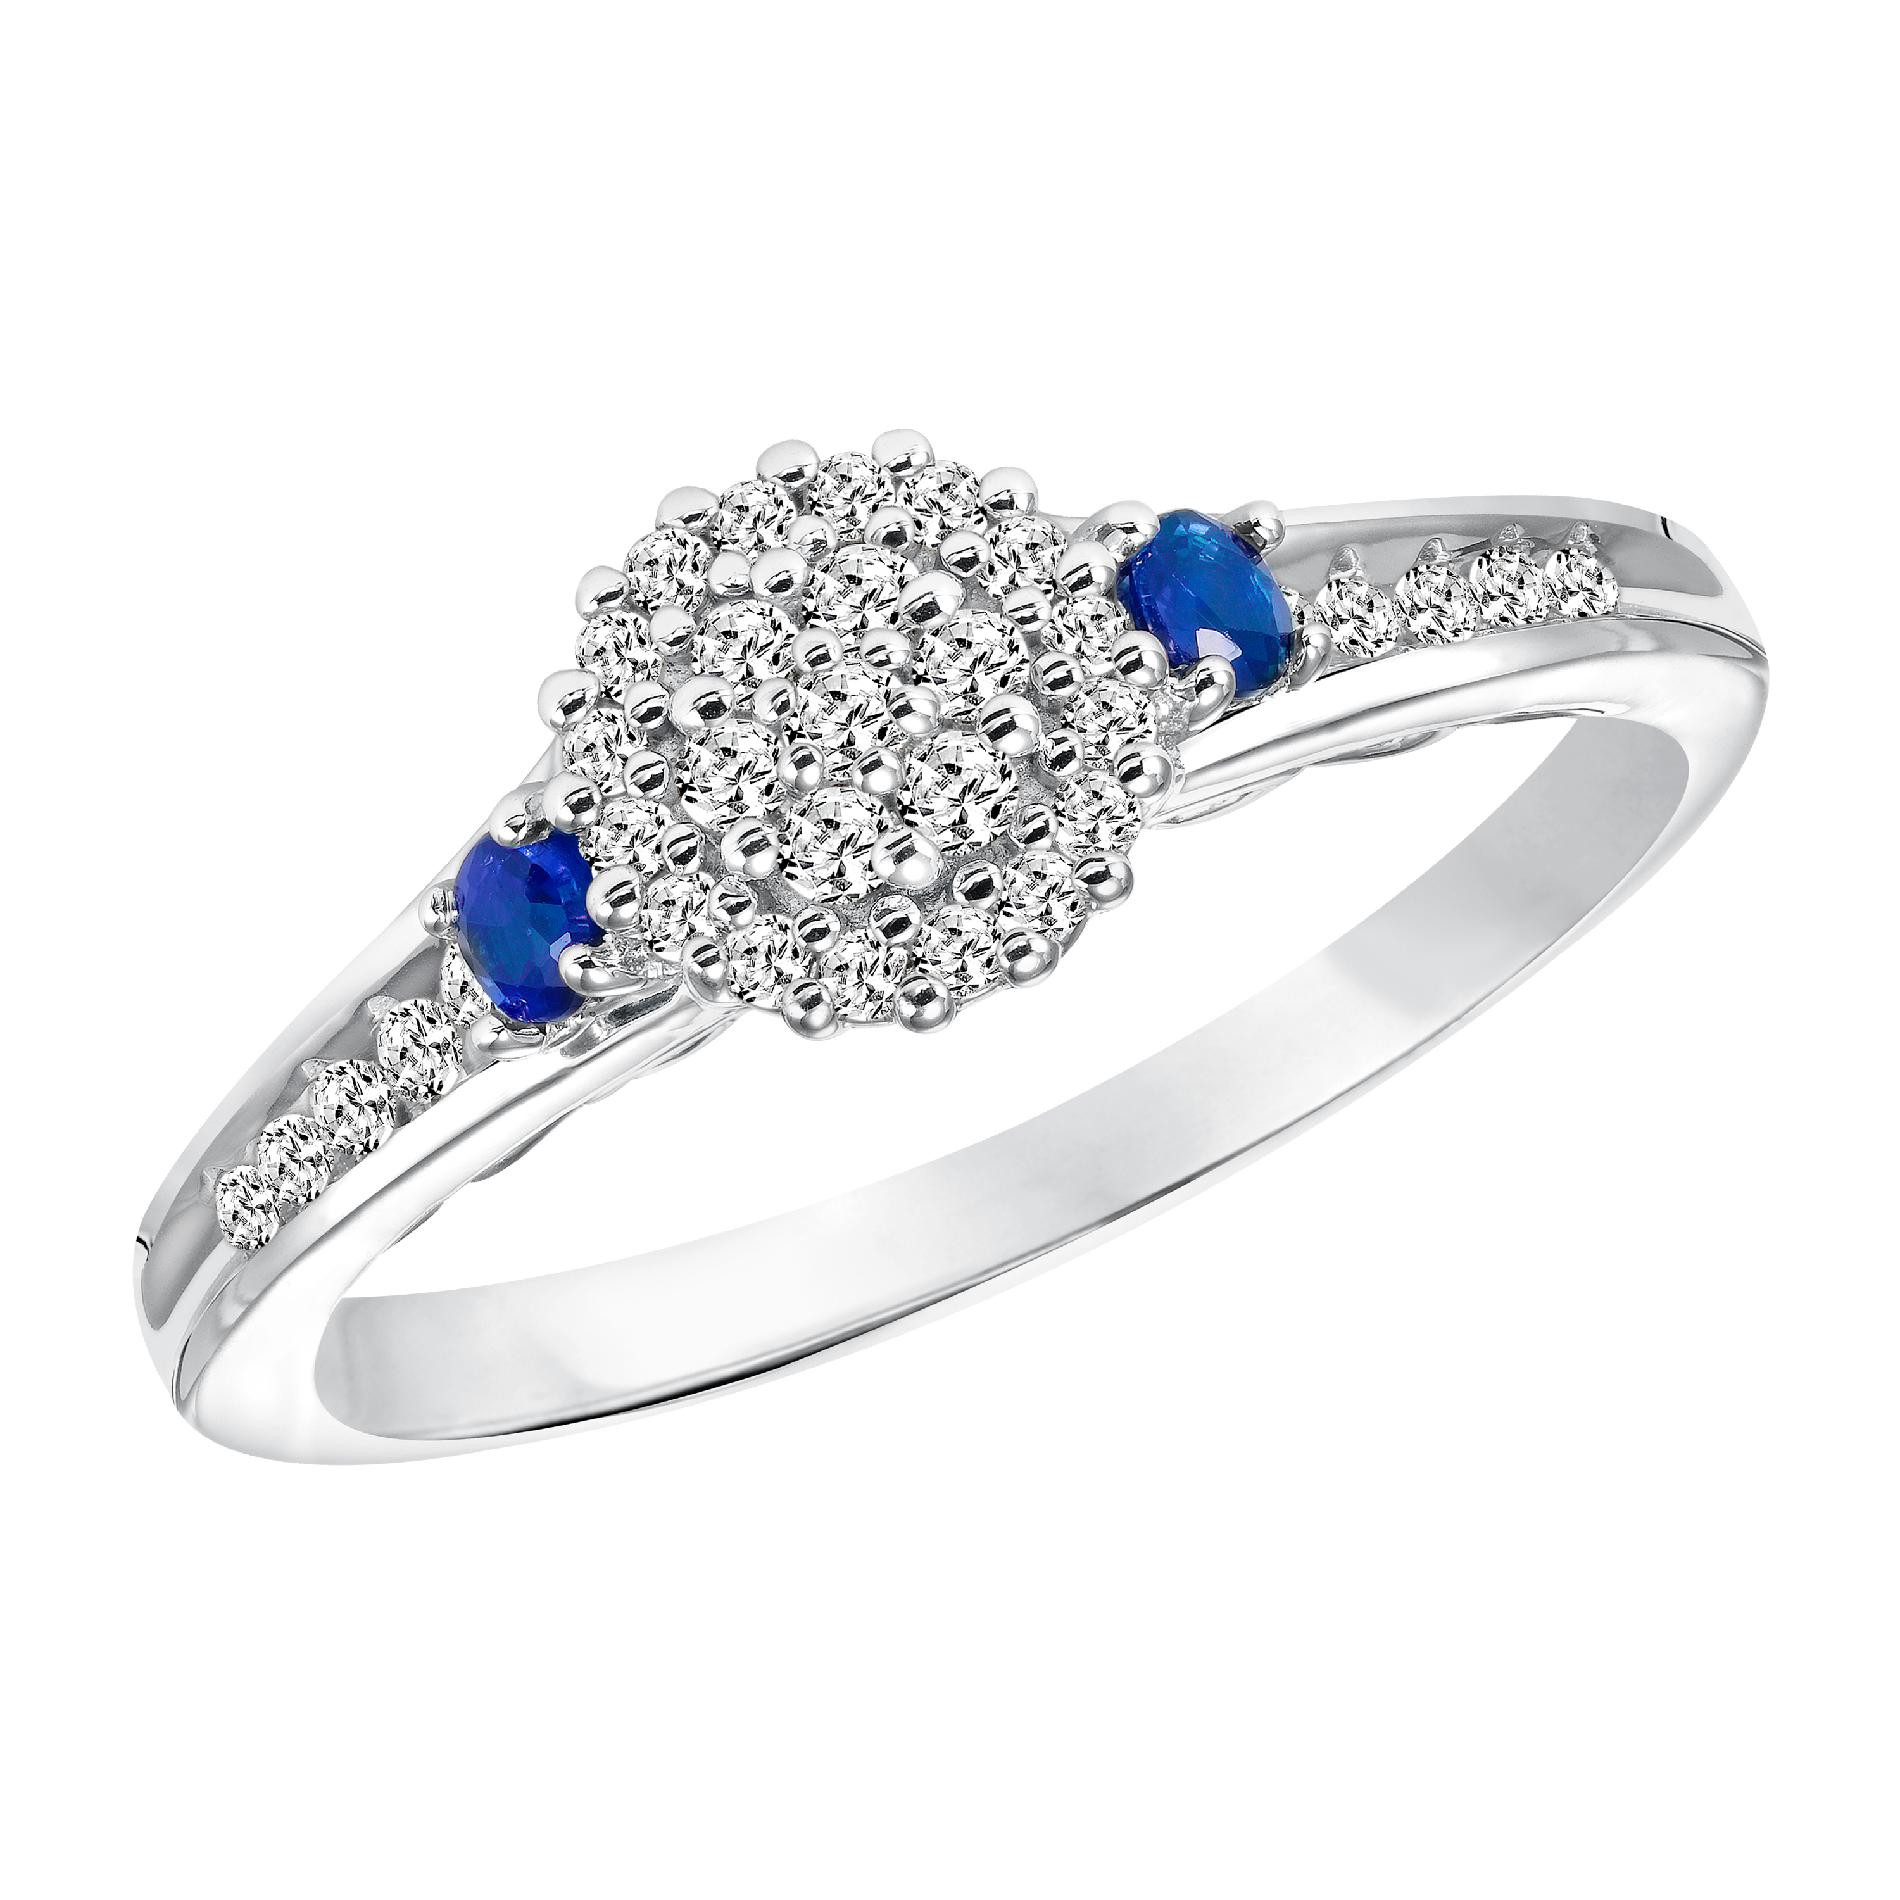 Kmart Wedding Ring Sets
 Engagement Rings